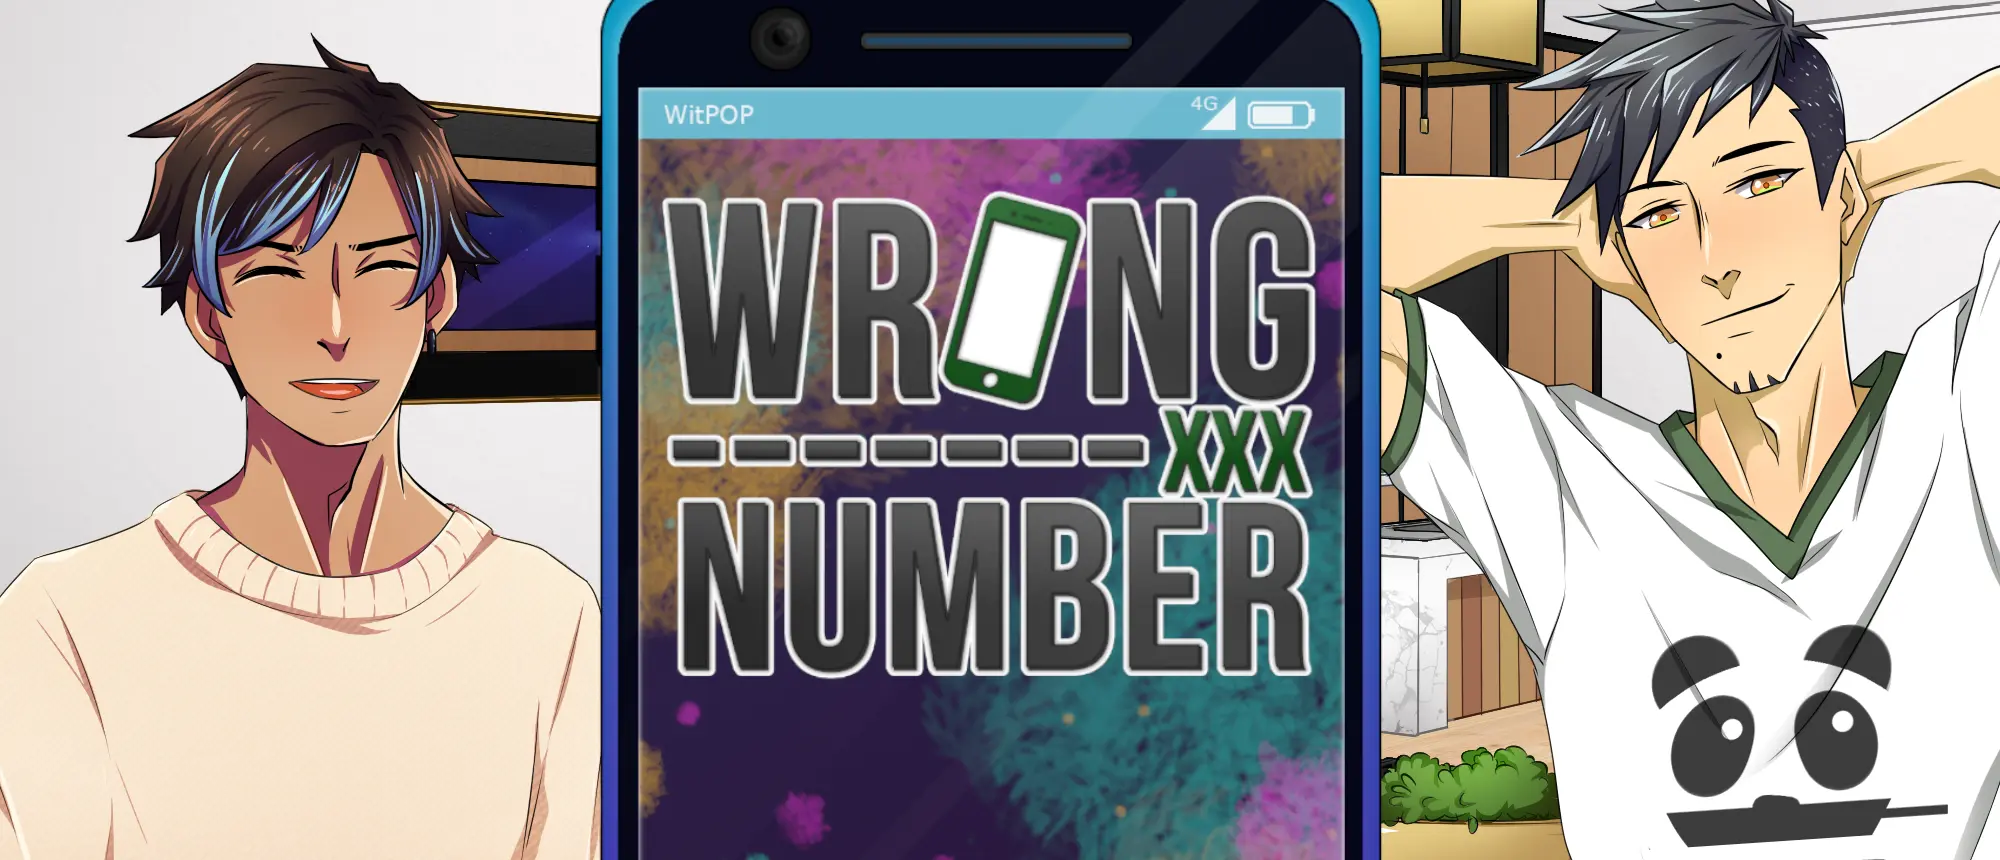 Wrong Number main image